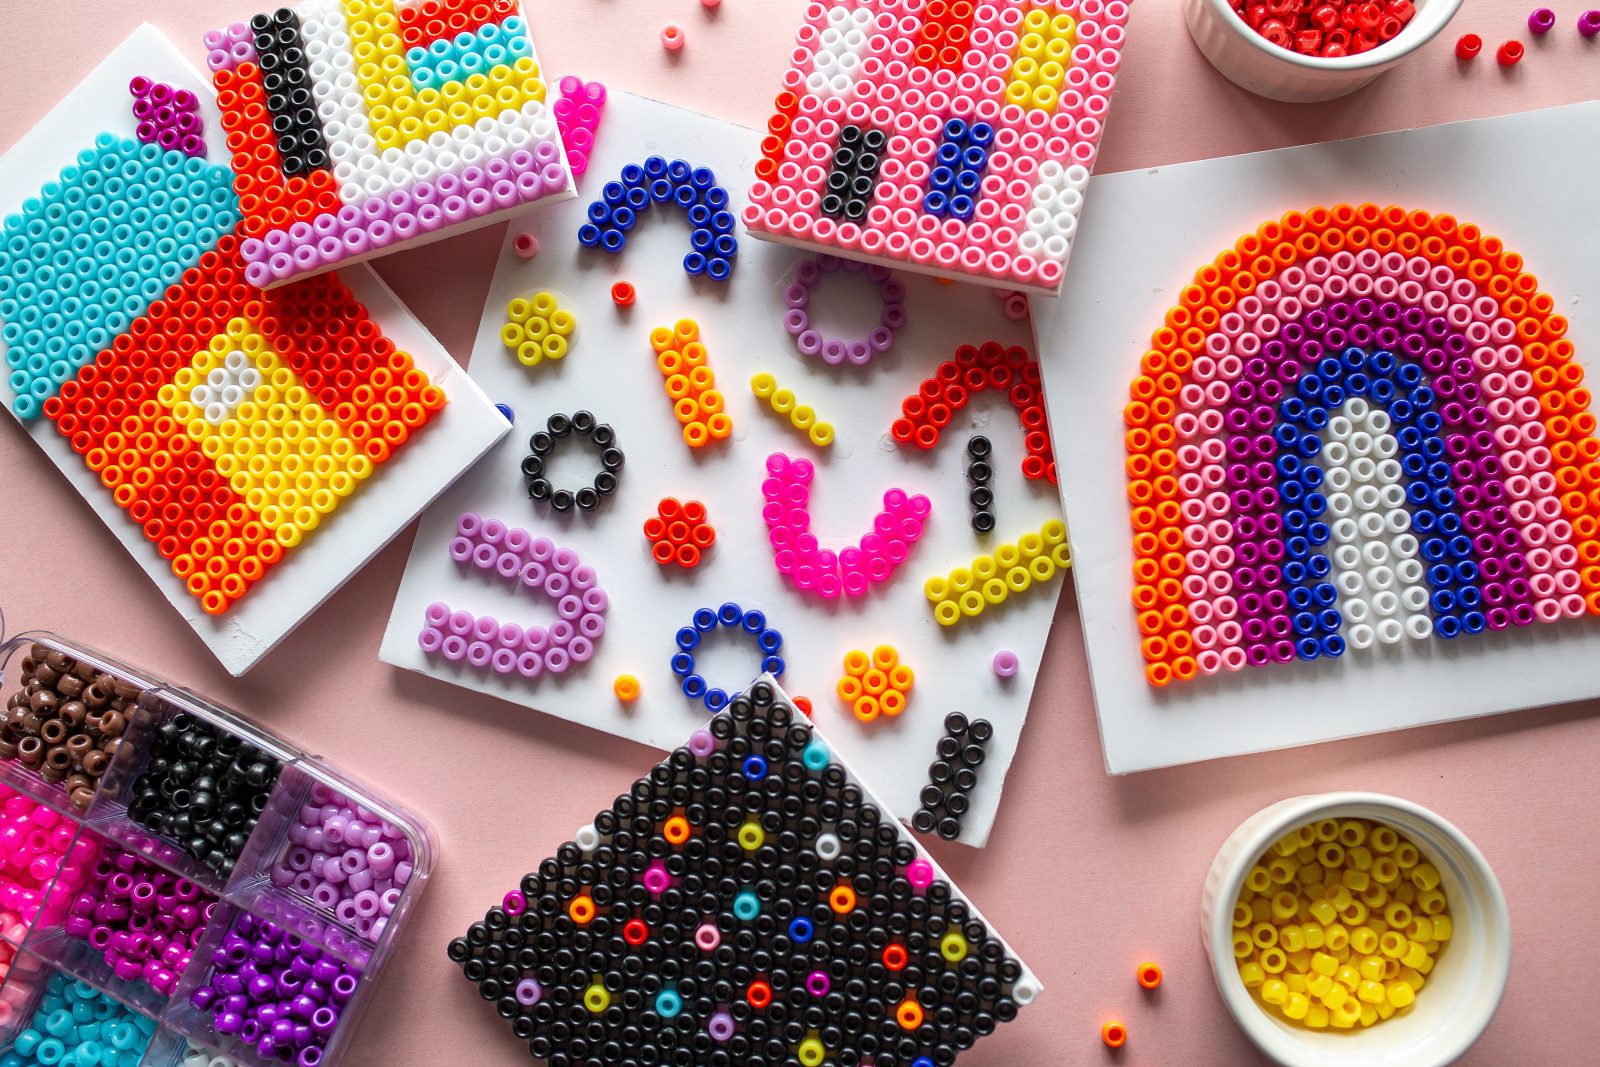 Make a Mosaic, Crafts for Kids